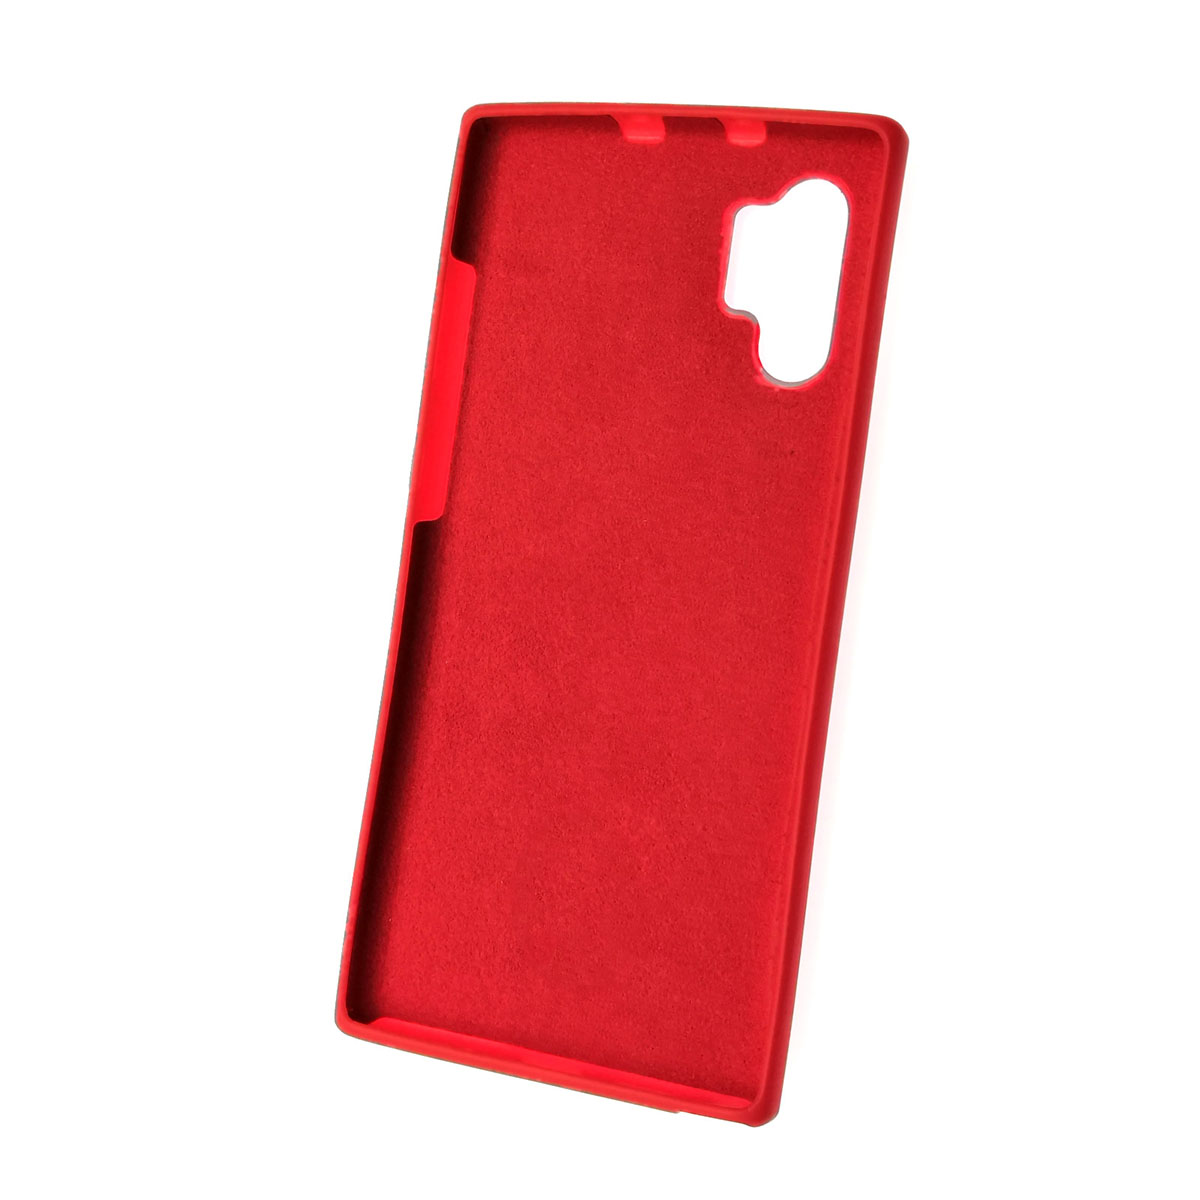 Чехол накладка Silicon Cover для SAMSUNG Galaxy Note 10 Plus (SM-N975), силикон, бархат, цвет красный.